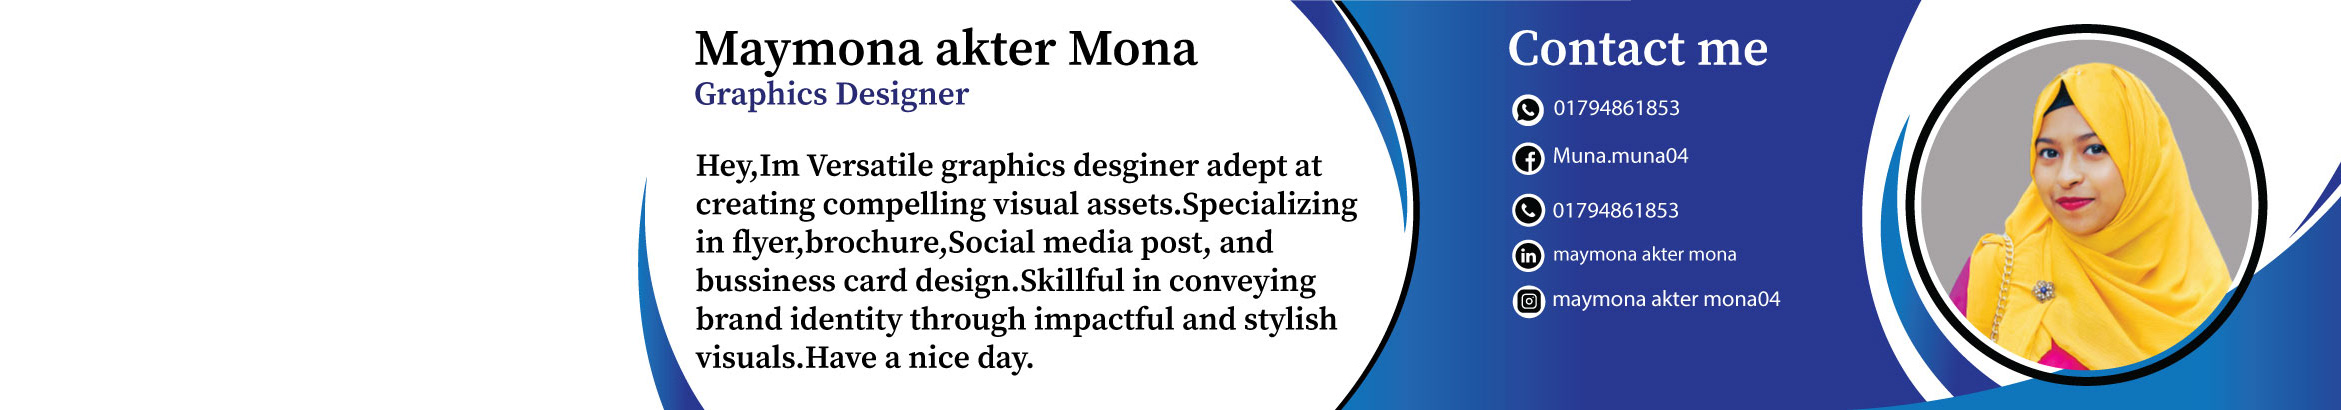 Profil-Banner von Maymona Akter Mona